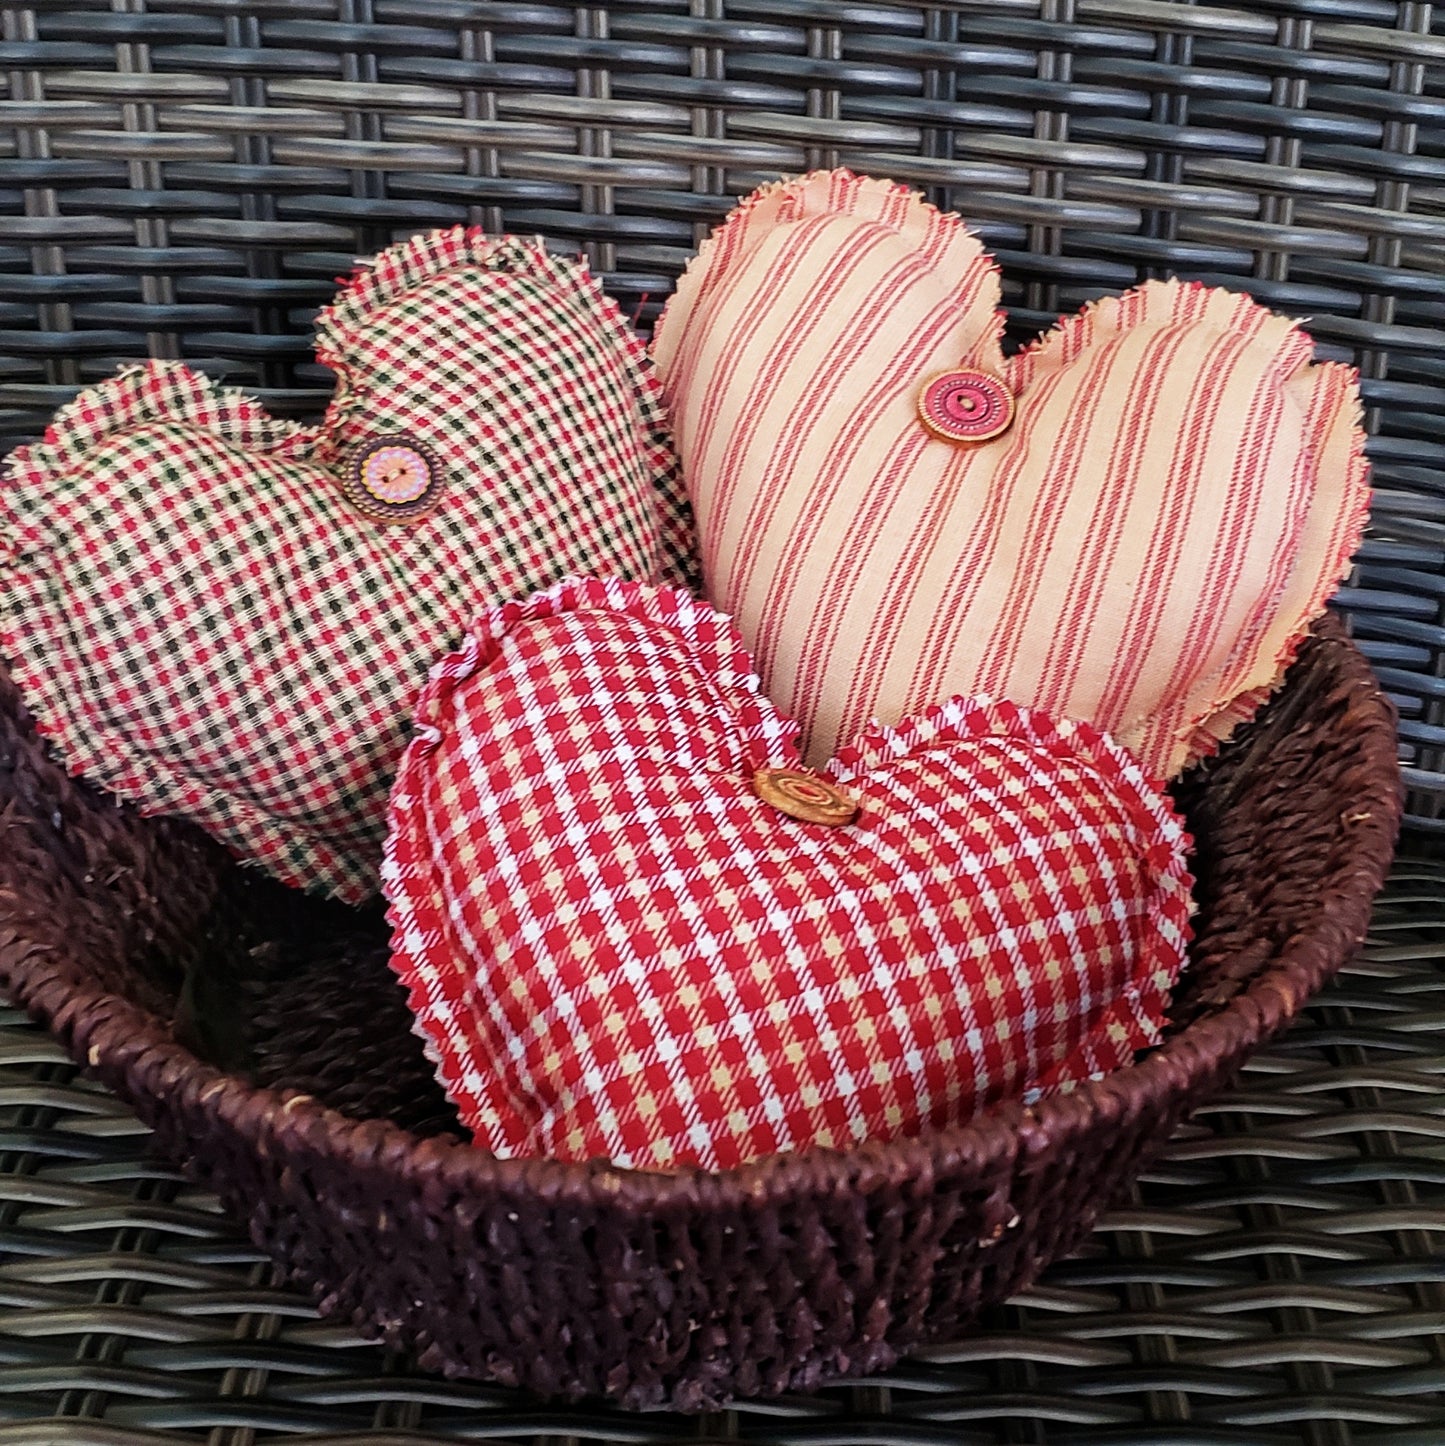 Farmhouse fabric hearts